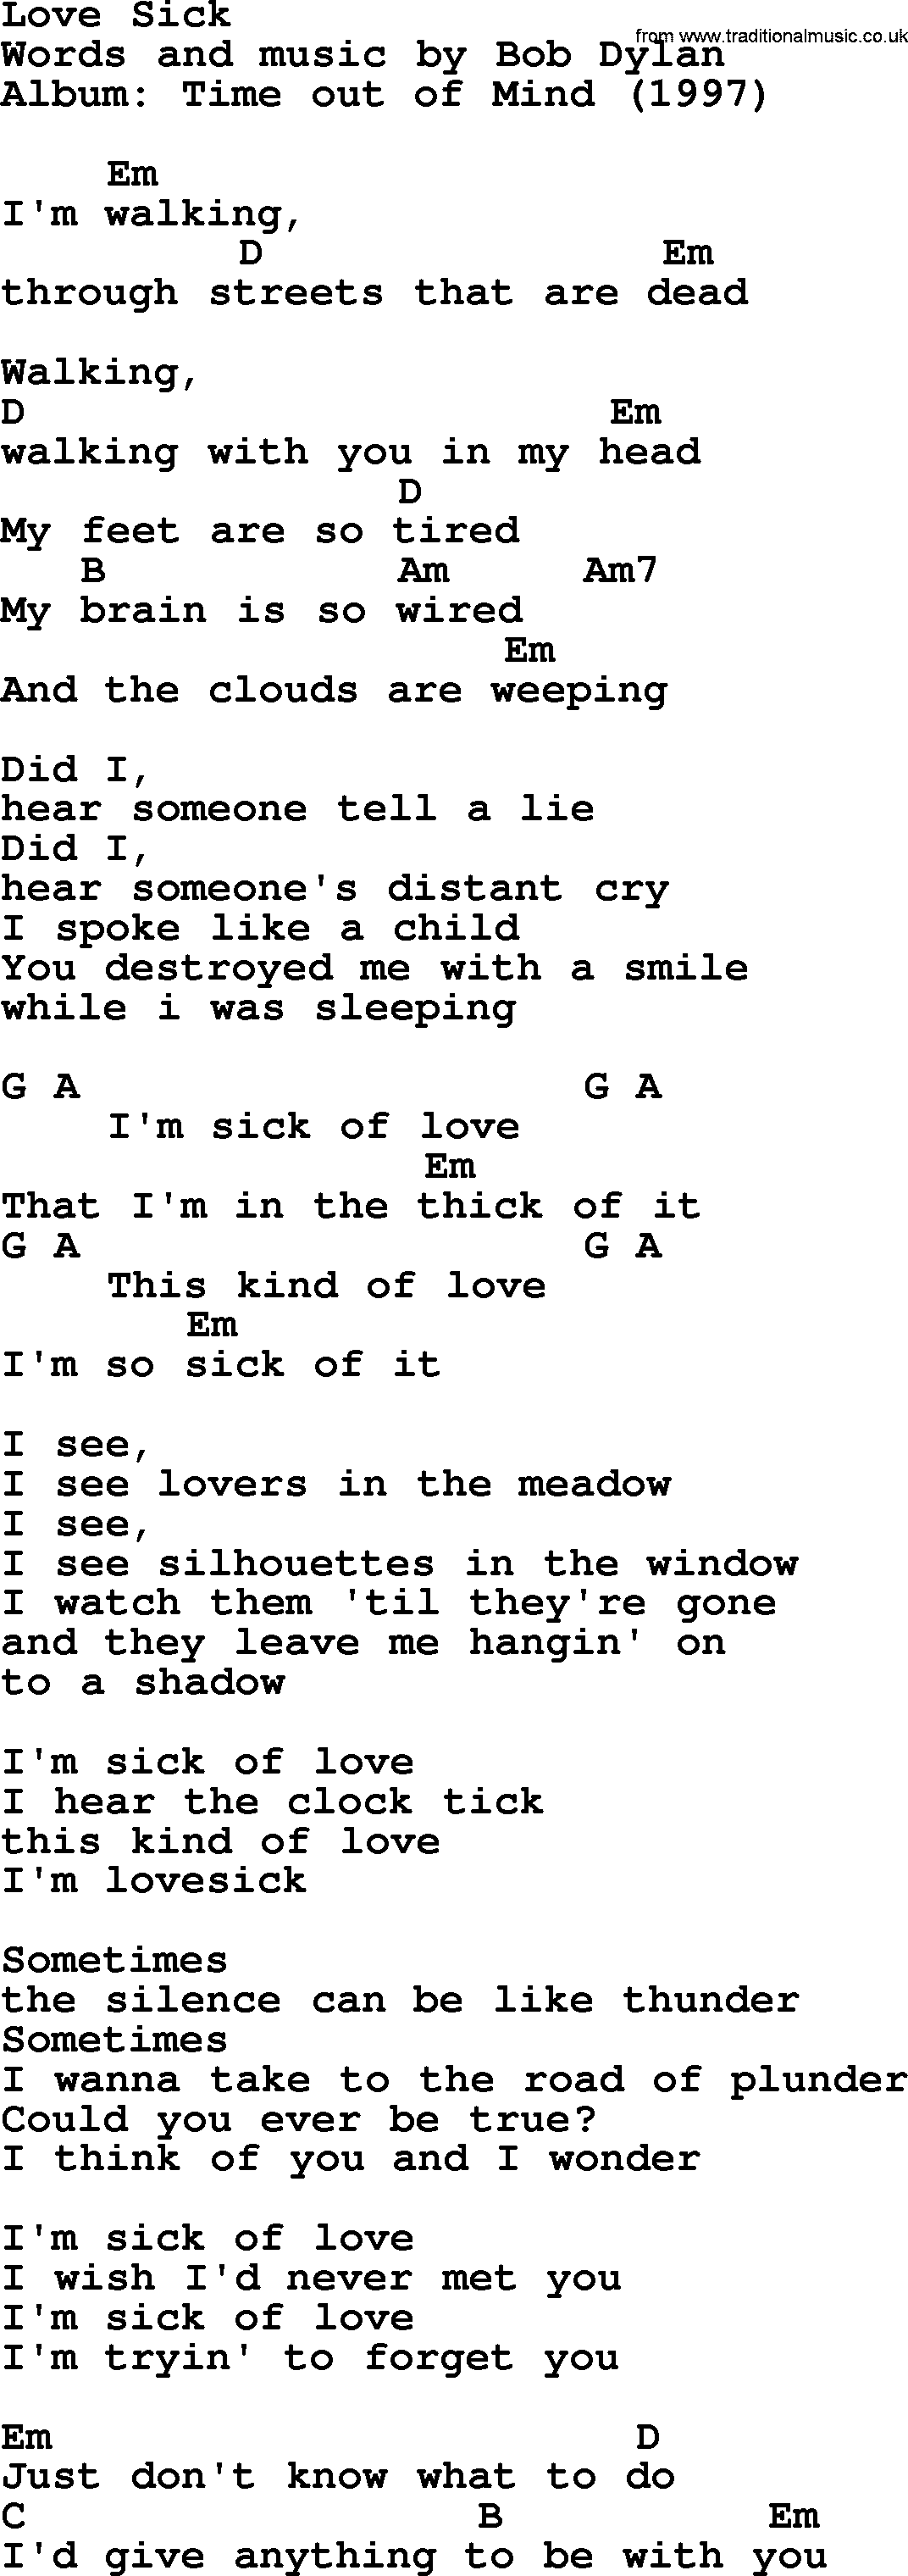 Bob Dylan song, lyrics with chords - Love Sick